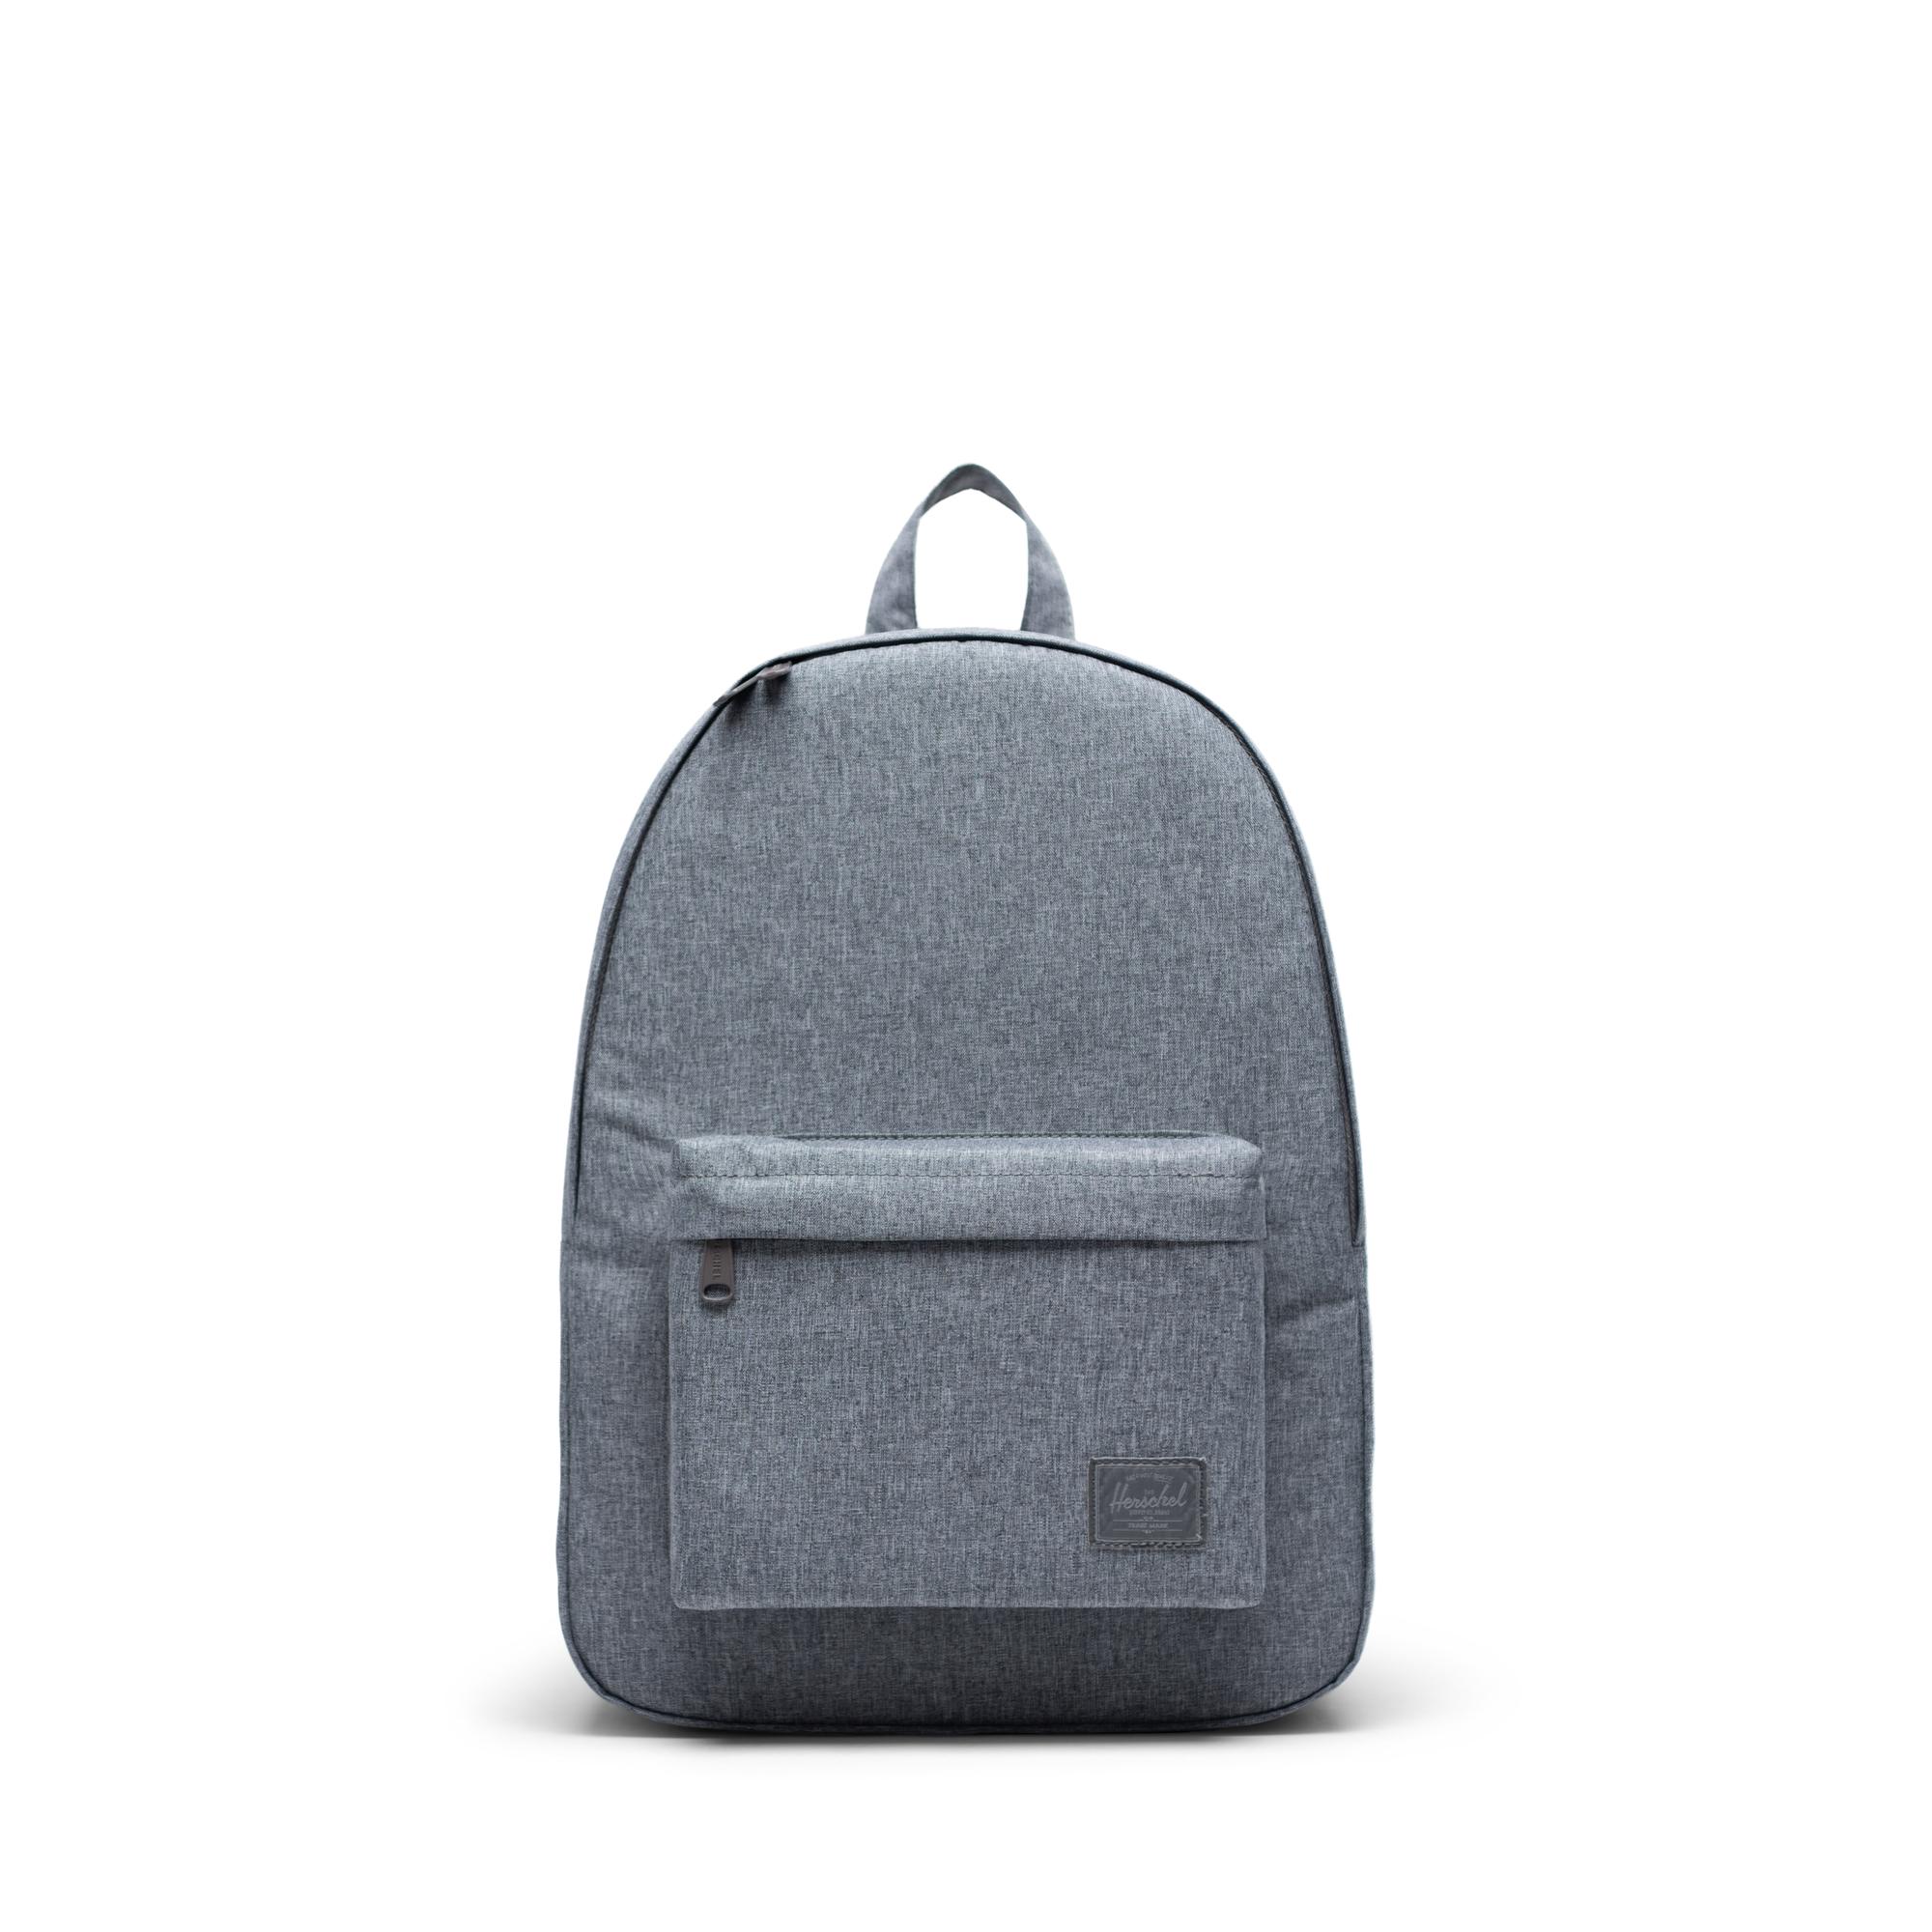 Classic Backpack Mid-Volume Light | Herschel Supply Company